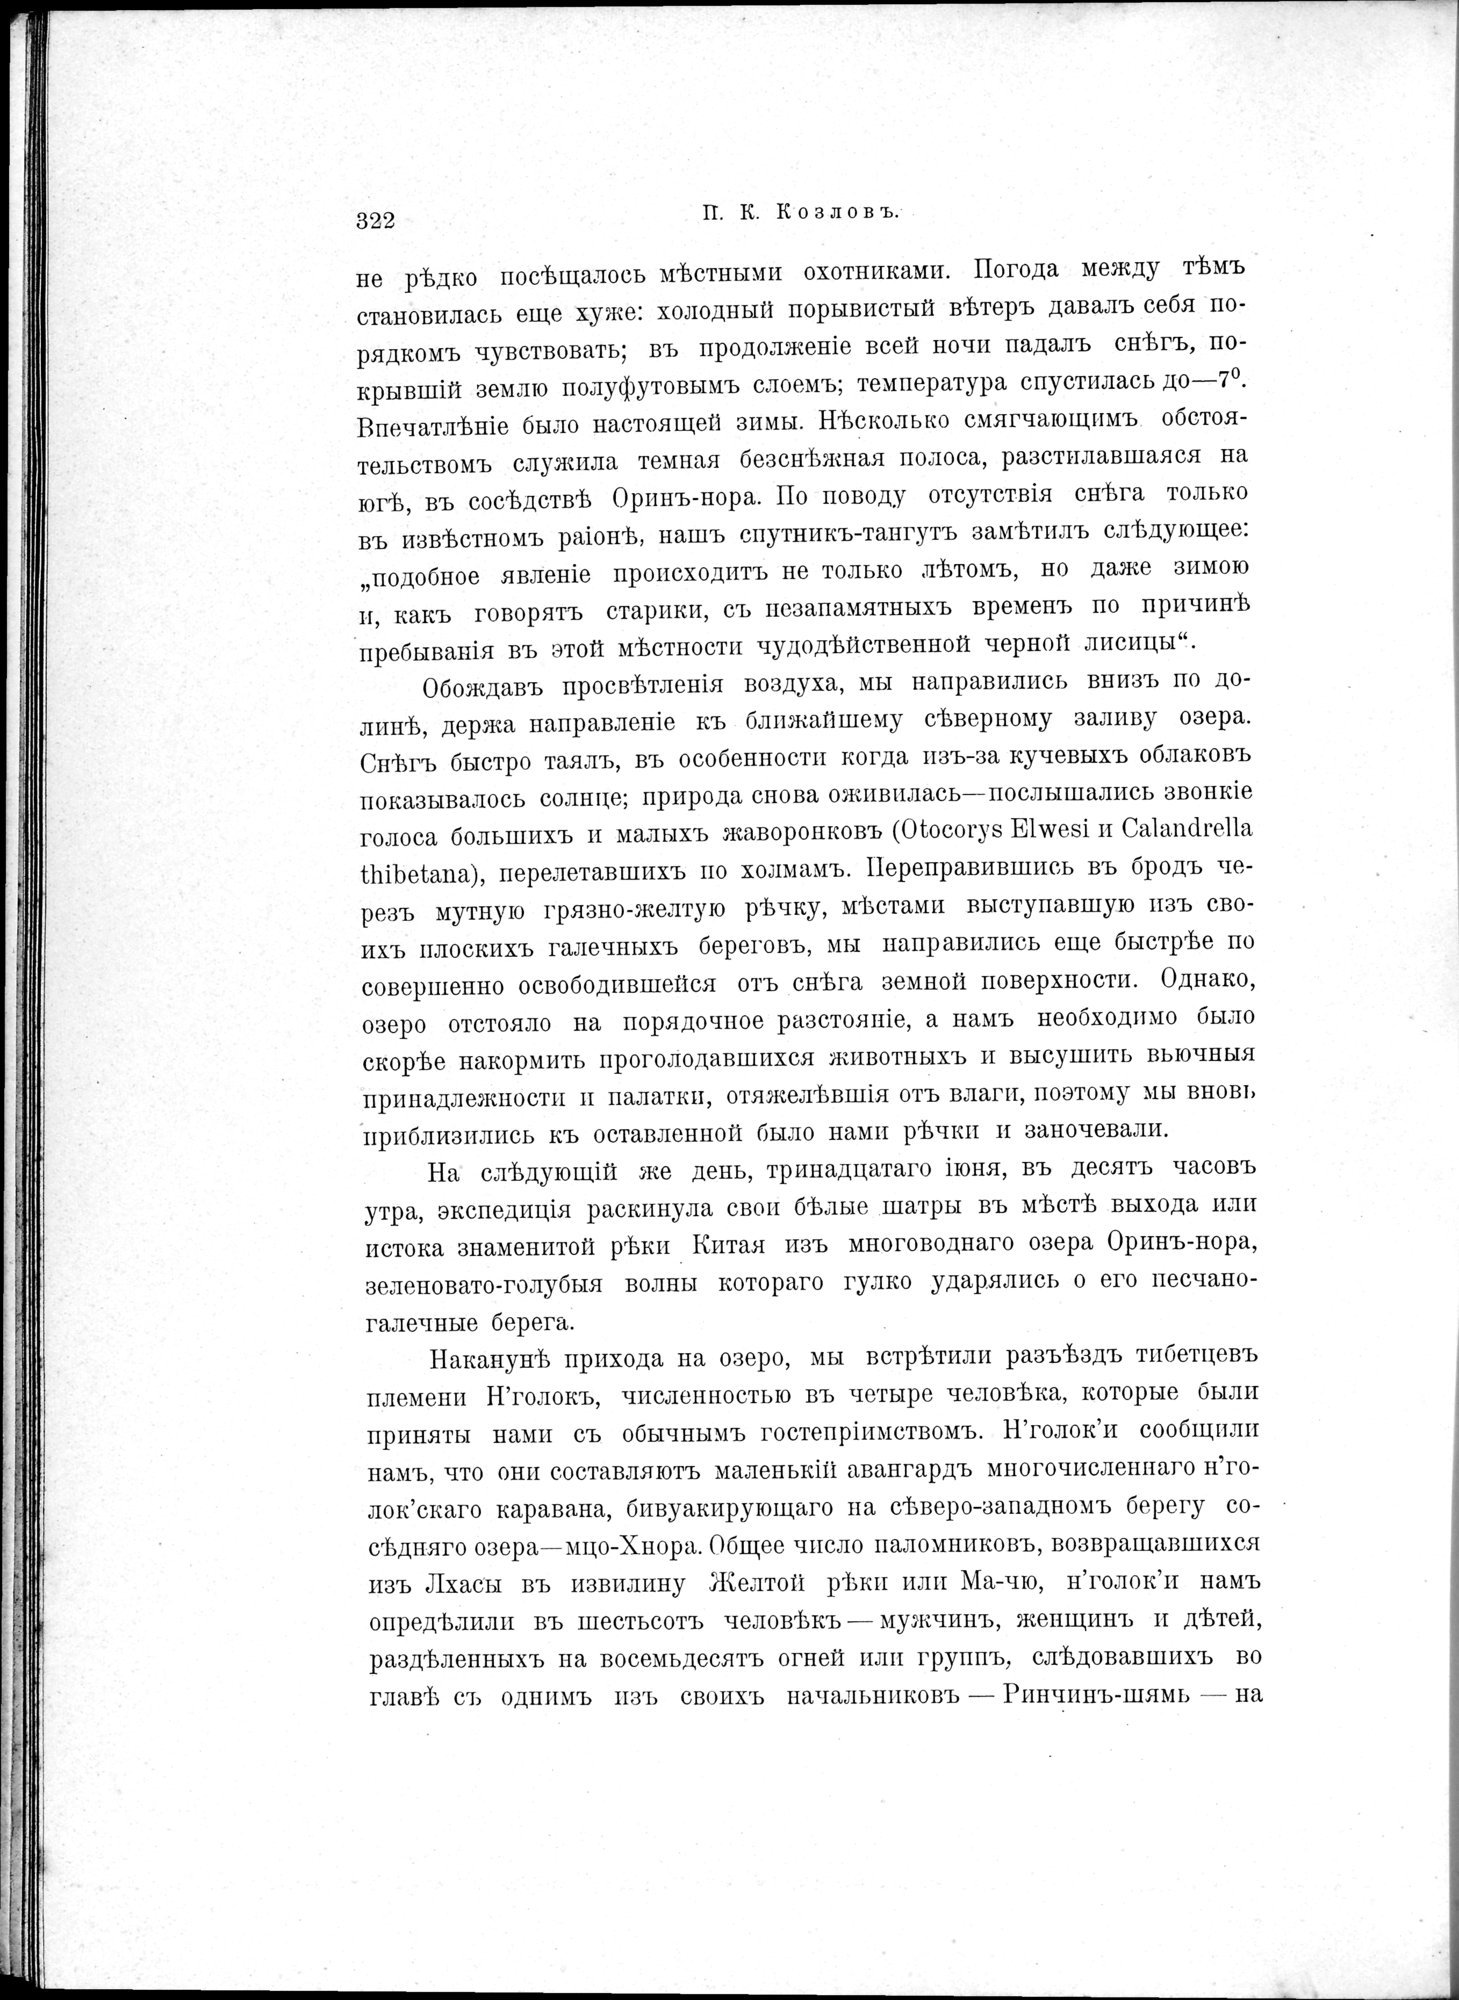 Mongoliia i Kam : vol.2 / Page 92 (Grayscale High Resolution Image)